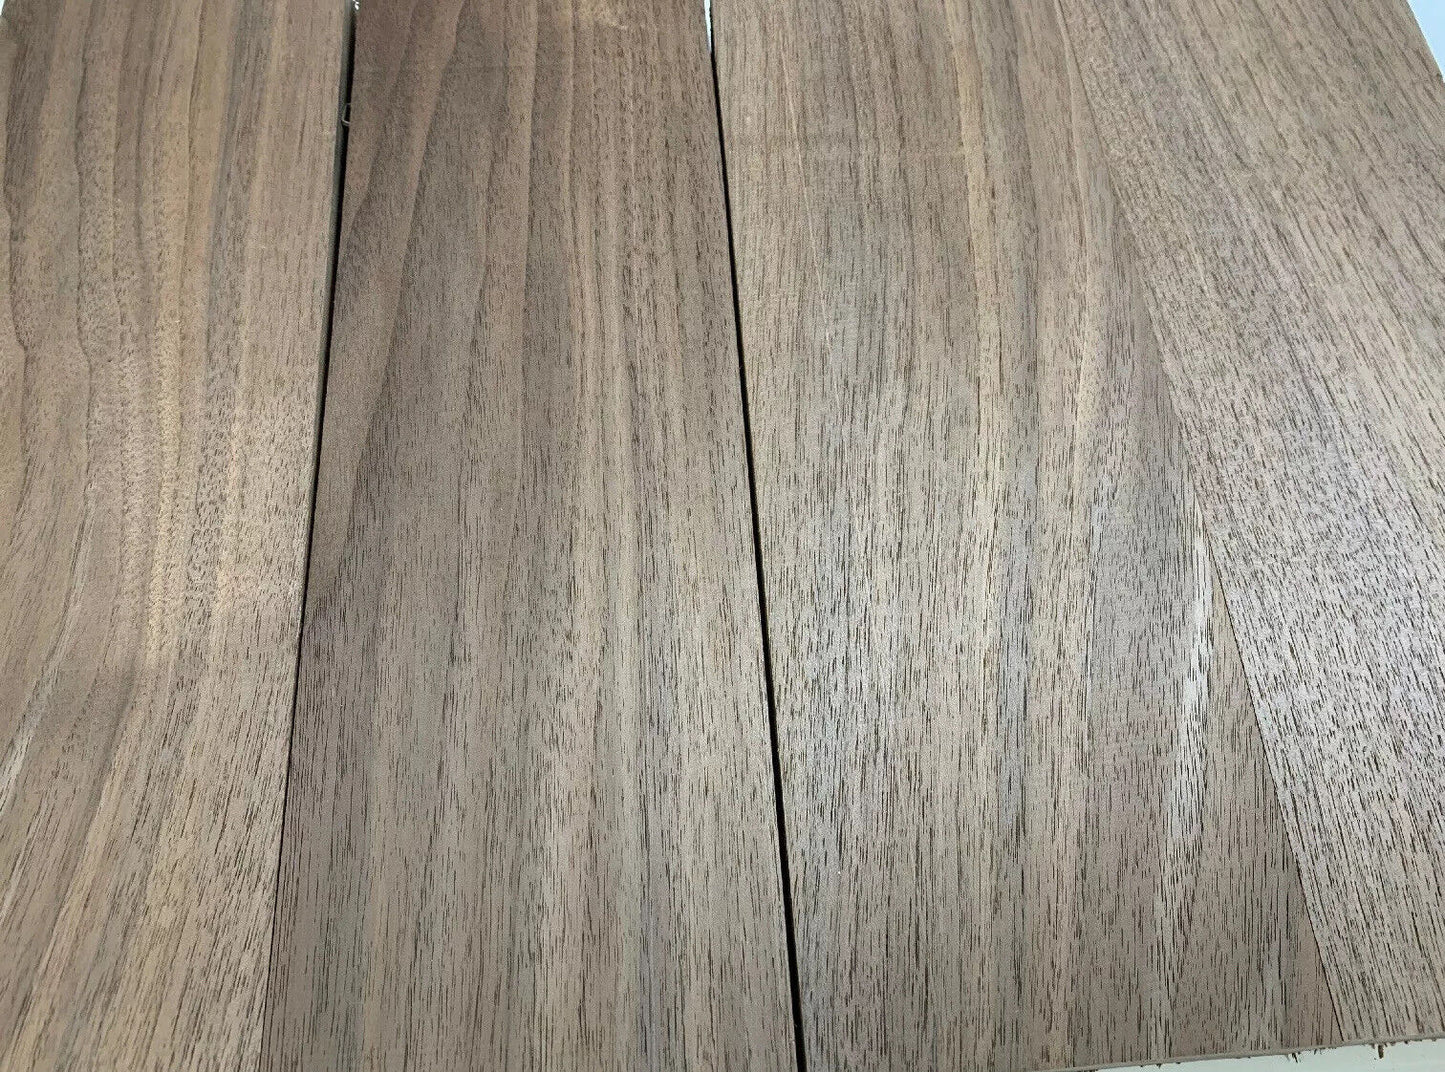 12 Boards, Black Walnut Lumber Dried (1/2” x 2” x 18”) DIY Wood